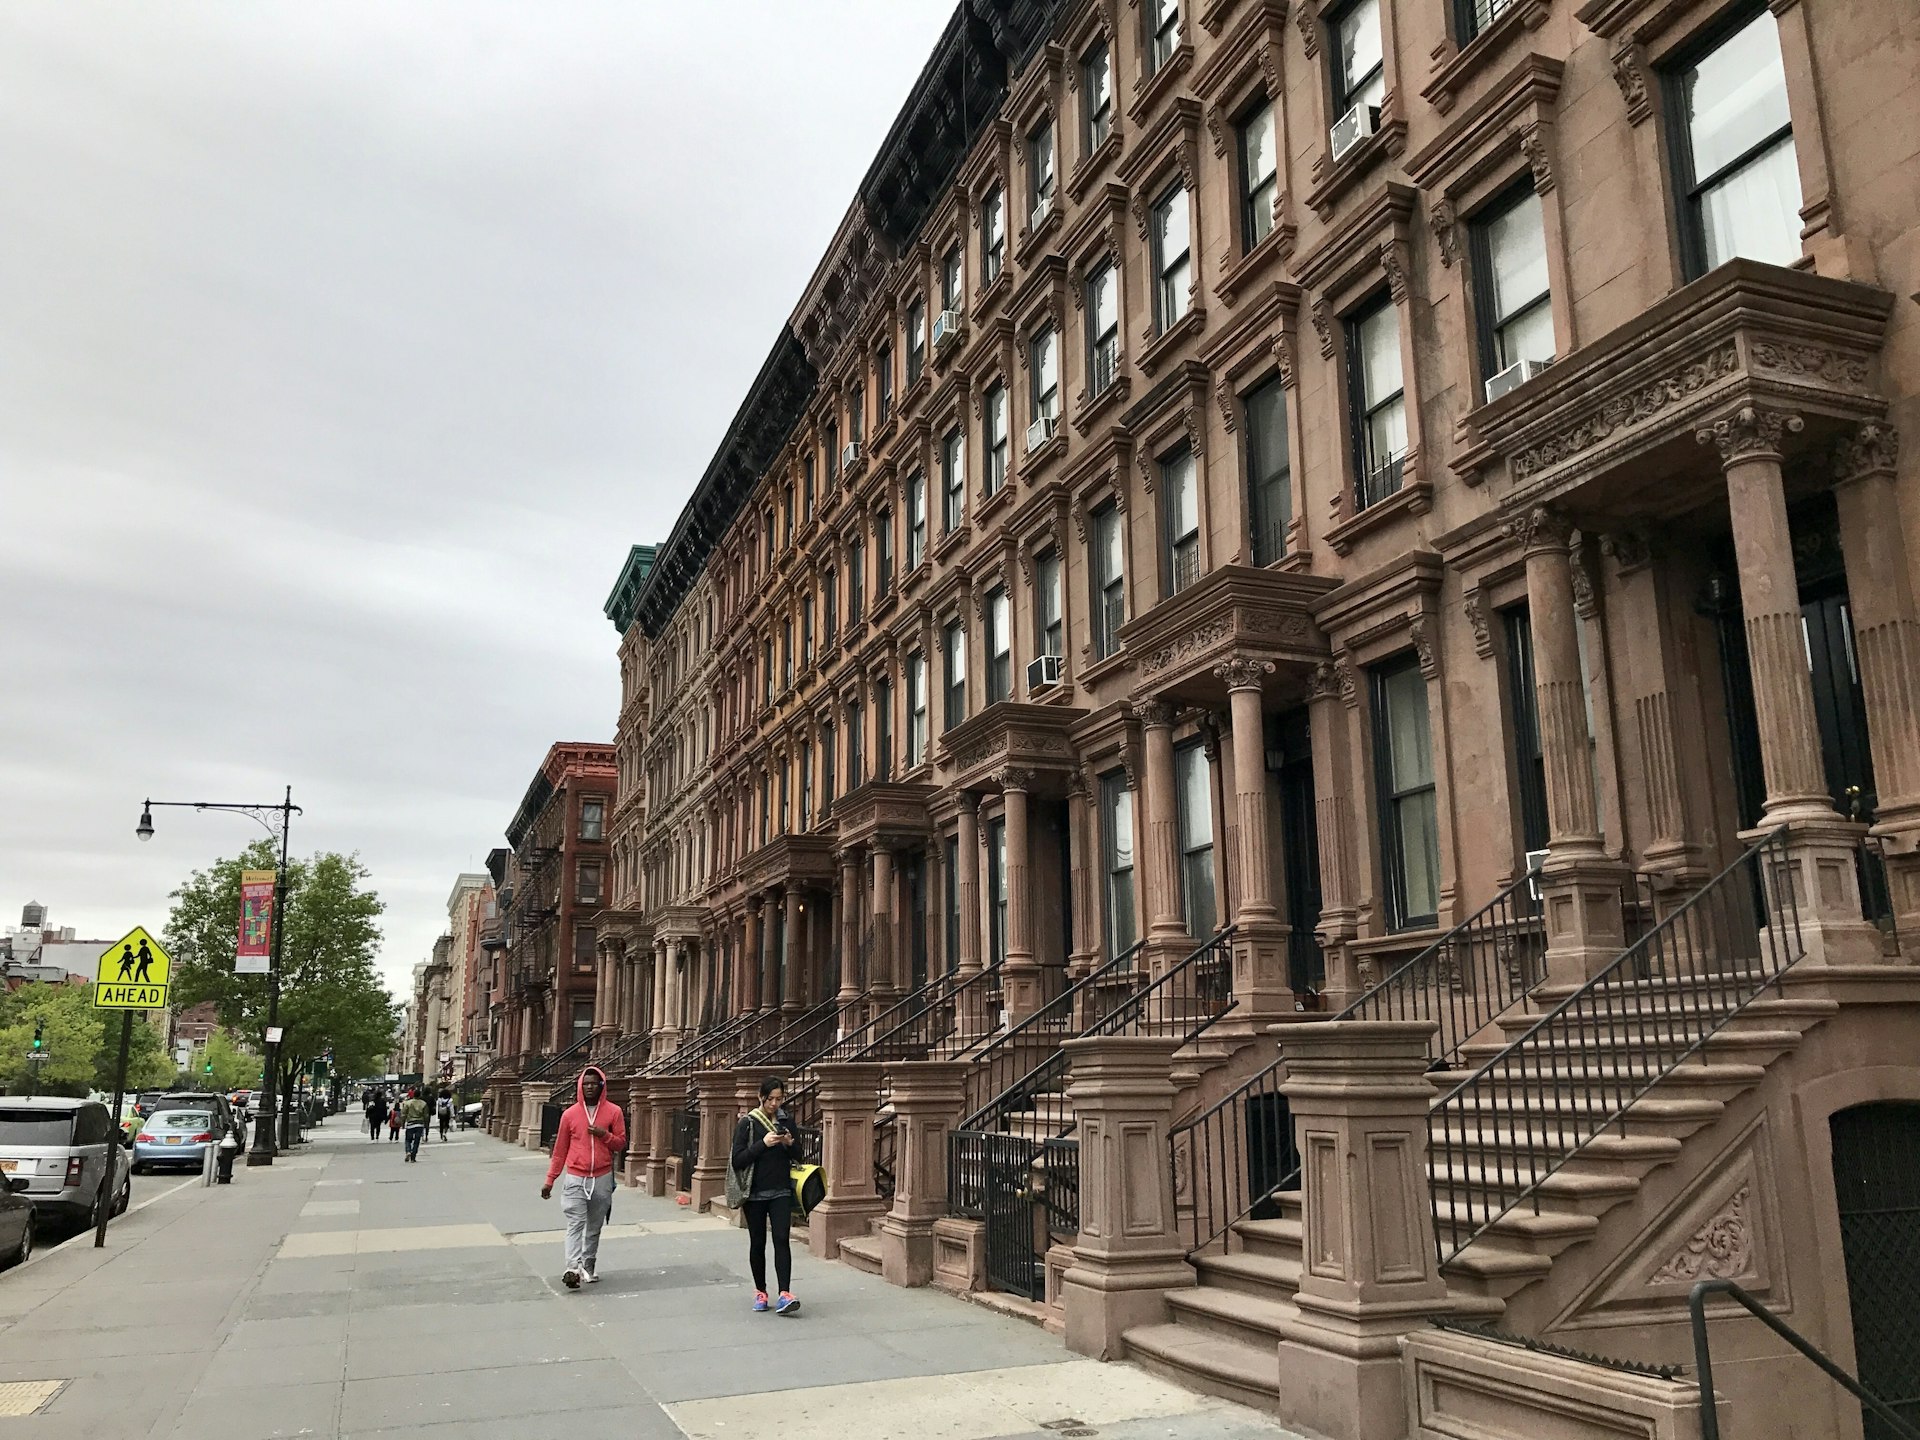 People walk by elegant brownstones on Lenox Ave, Harlem, New York City, New York, USA